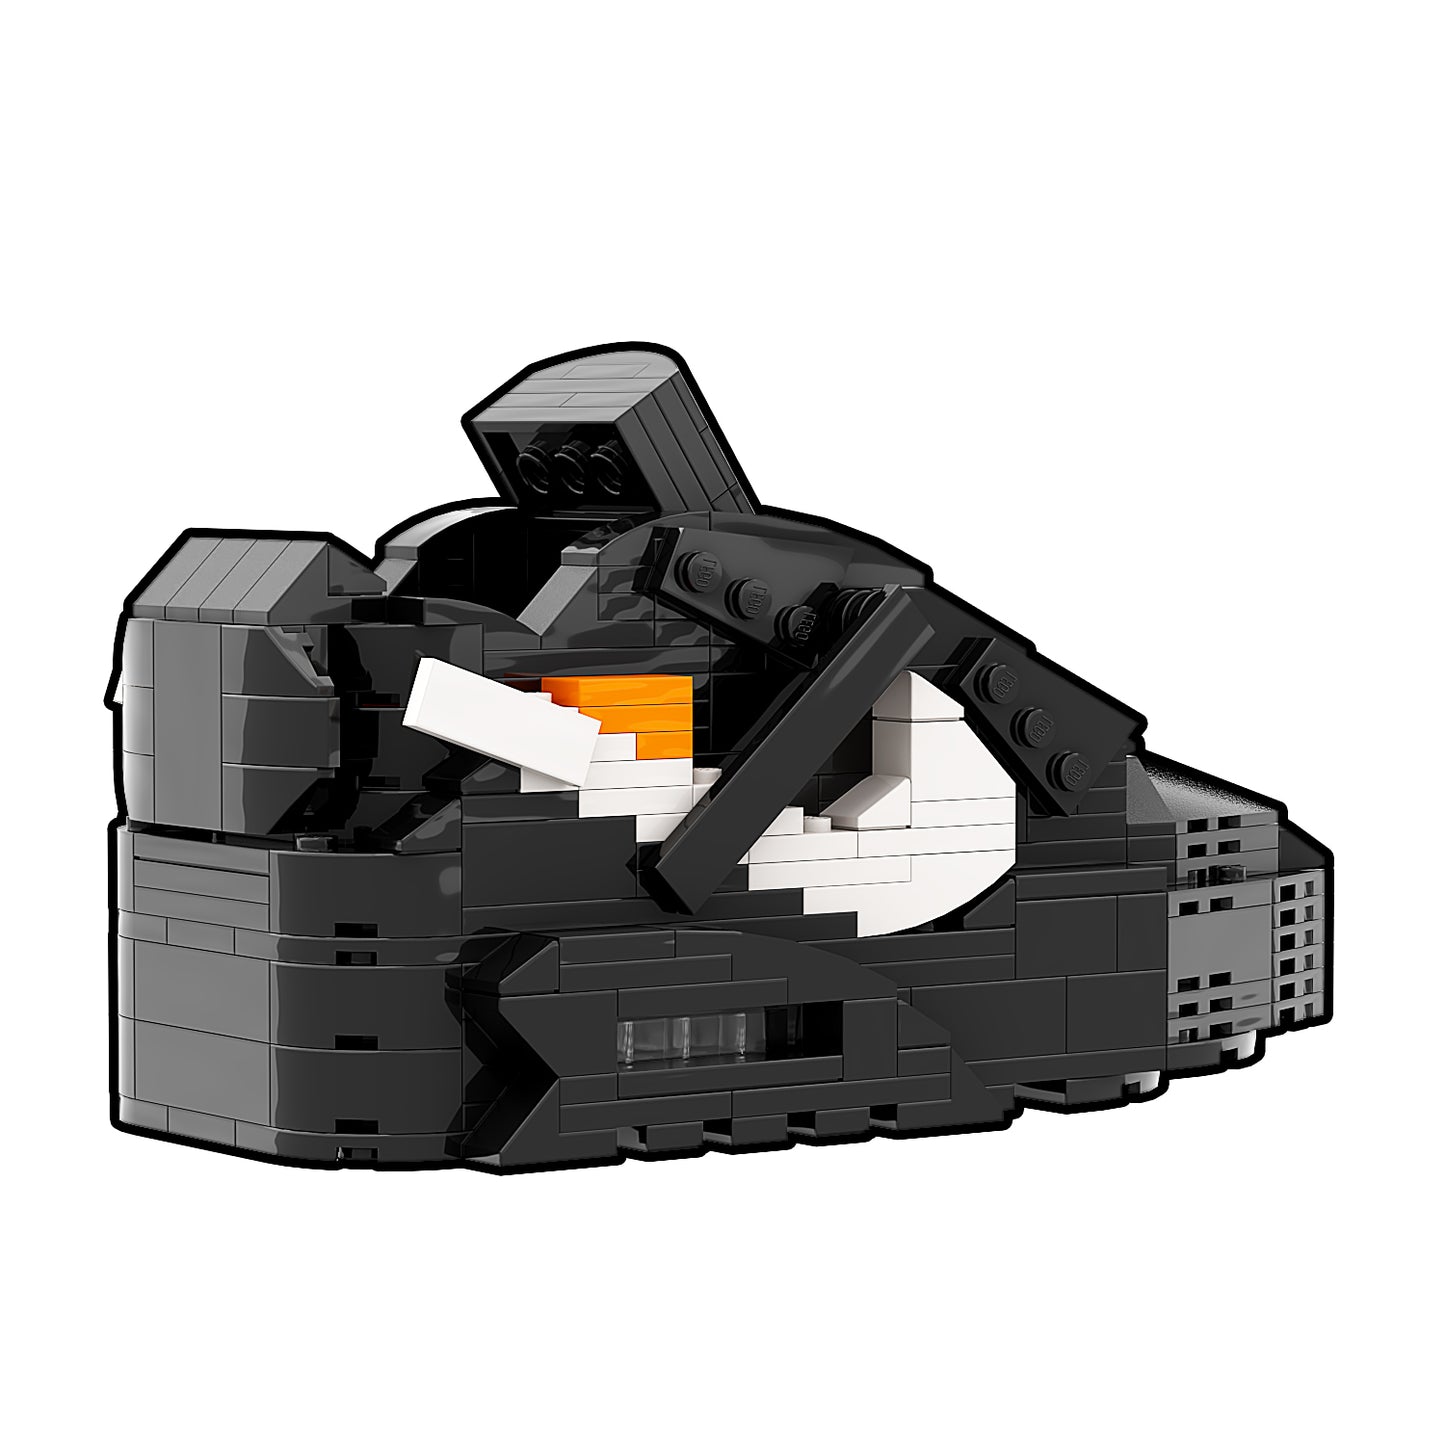 REGULAR Air Max 90 "Off-White Black" Sneaker Bricks with Mini Figure